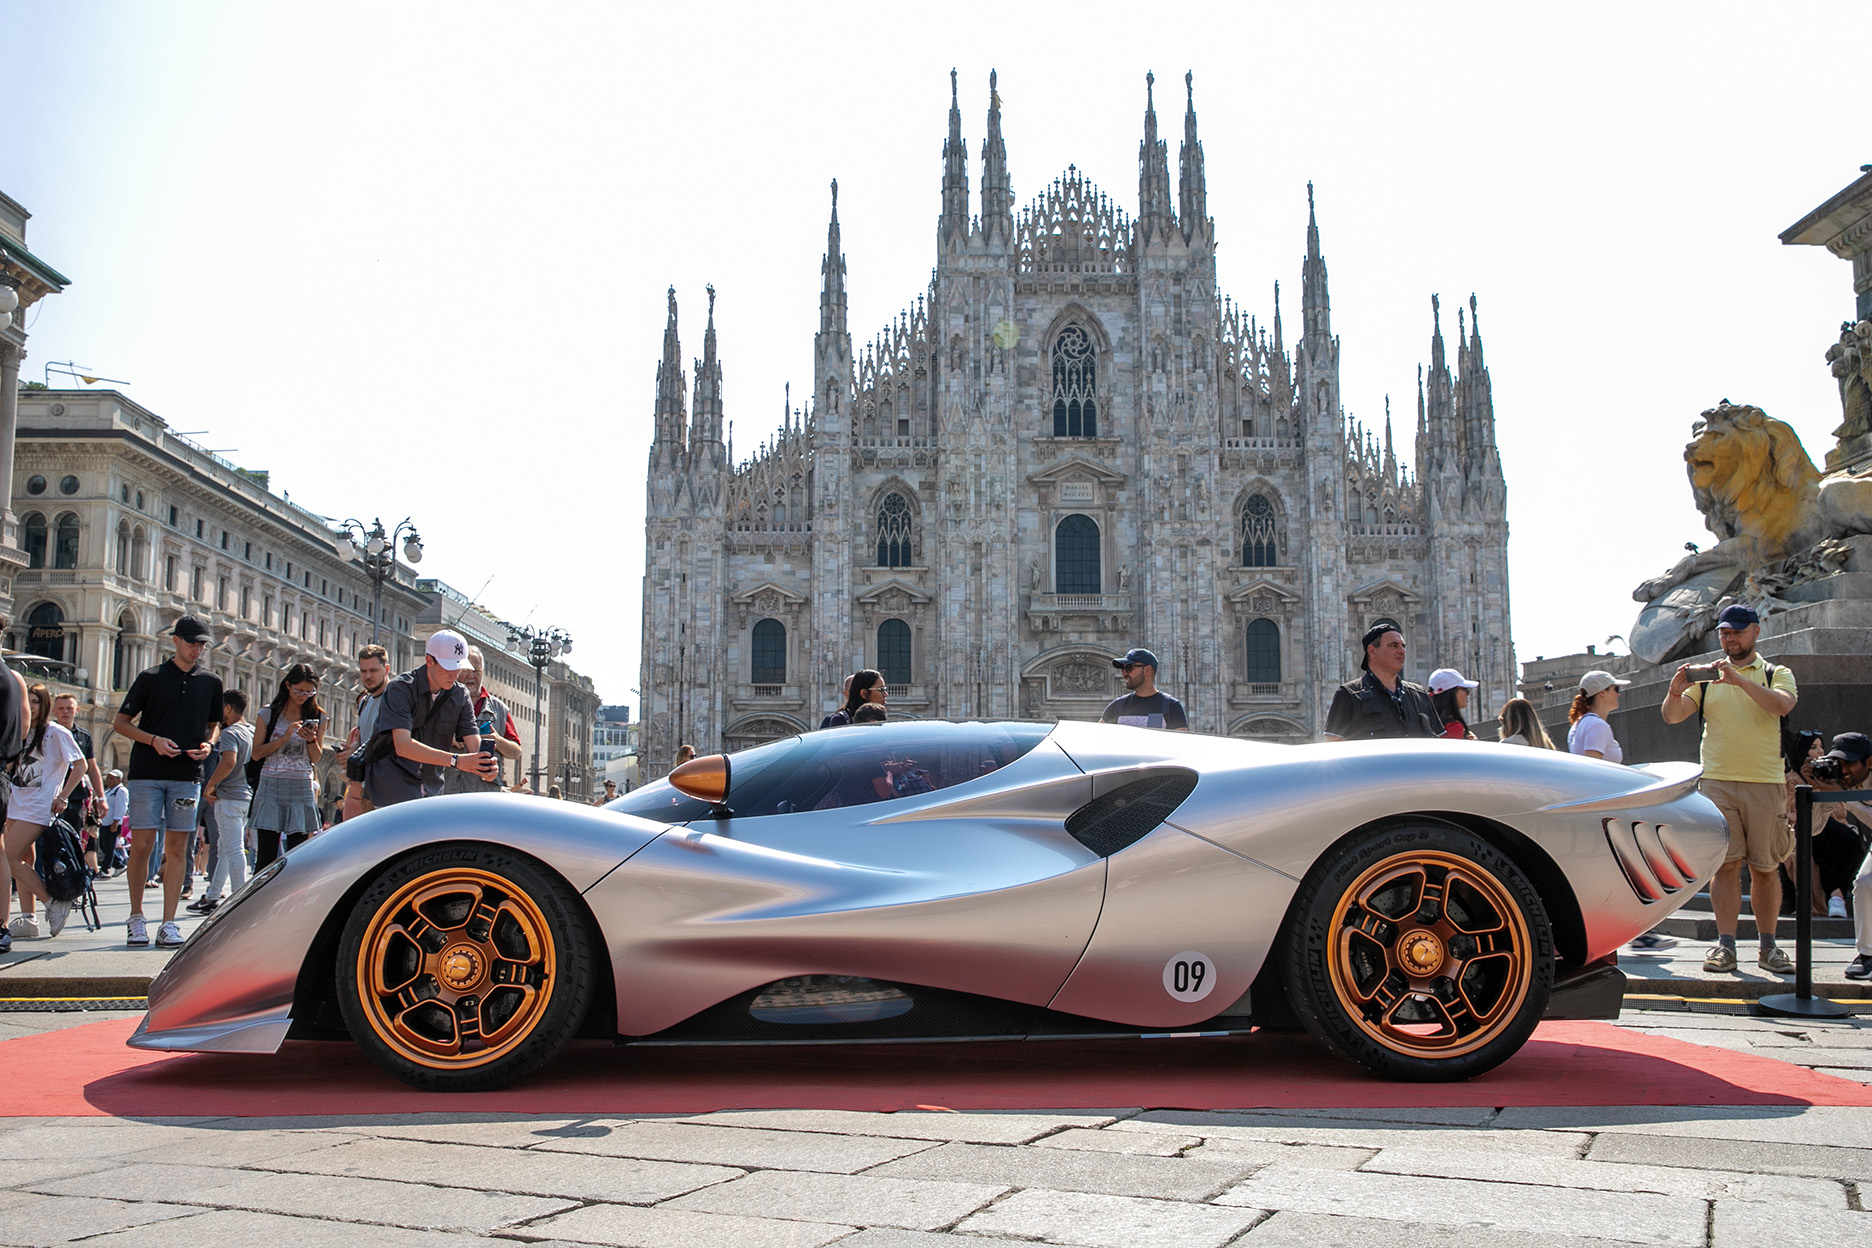 2023 Milano Monza Motor Show in Milan, Italy